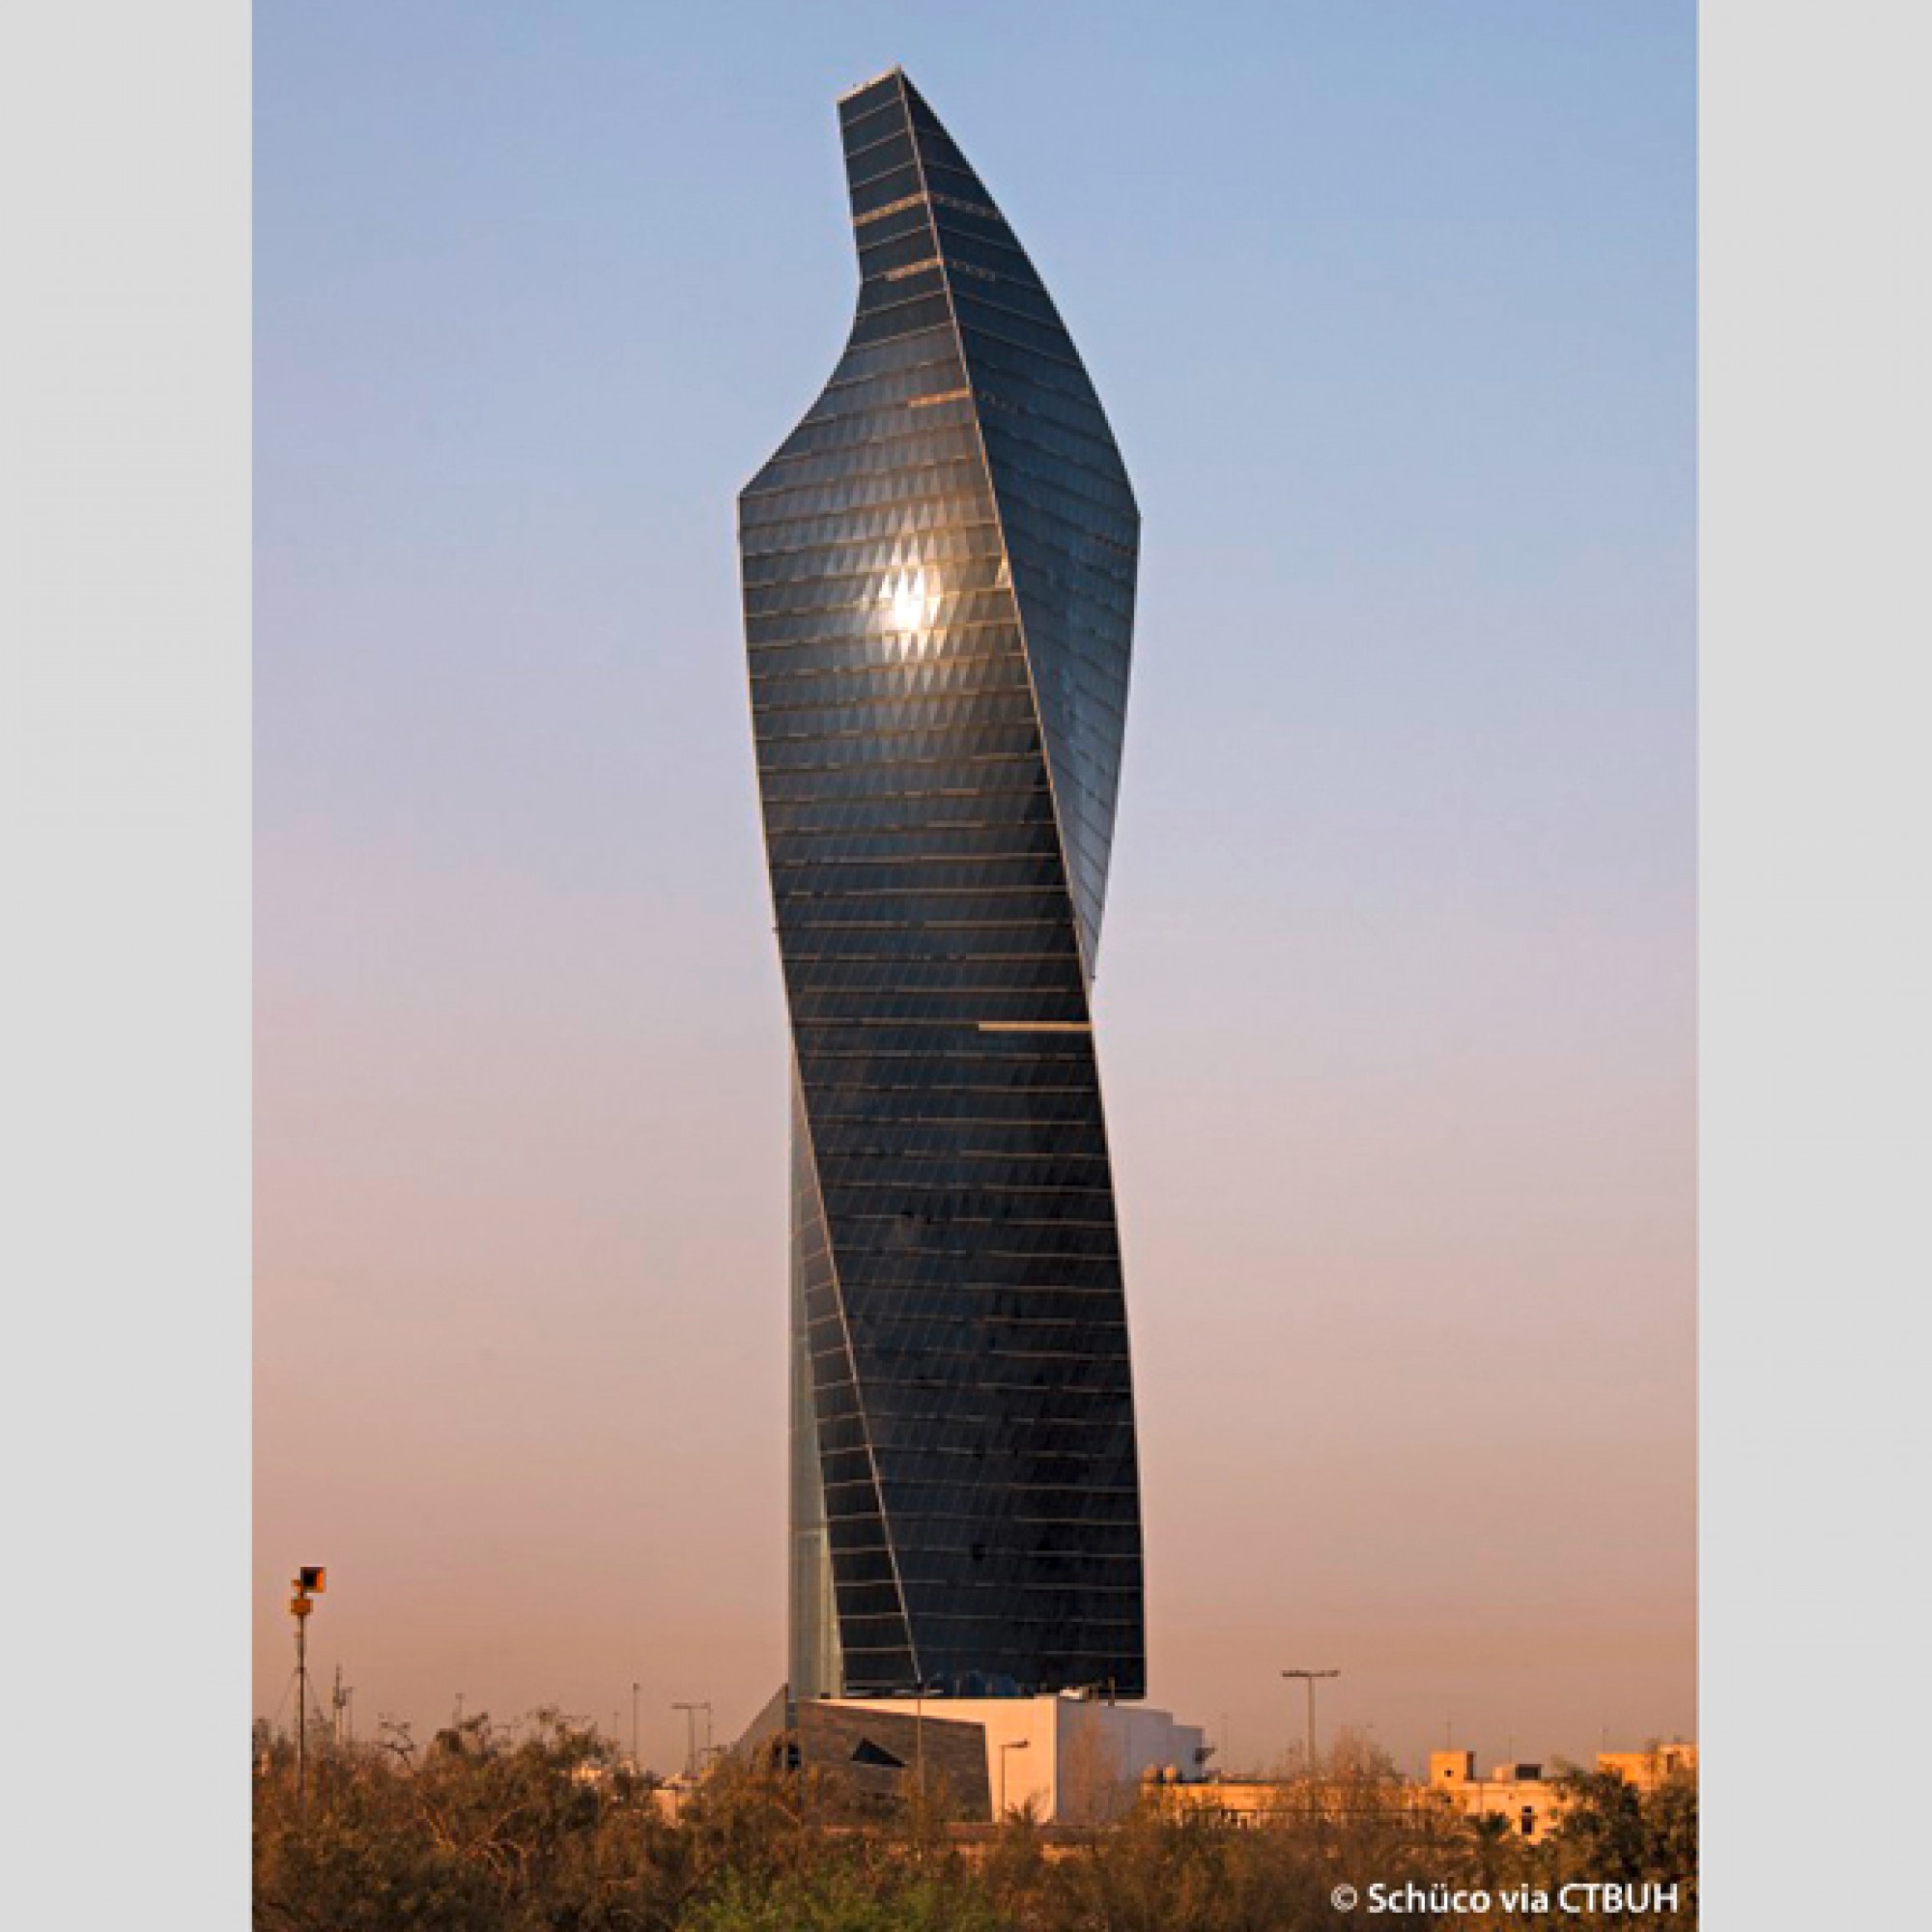  Rang 10, Al Tijaria Tower, Kuwait City, Kuwait,fertigestellt 2009,  218 Meter hoch, 41 Stockwerke, Rotation total 80 Grad, Rotation pro Etage 1.951  Grad. (Schüco/CTBUH)